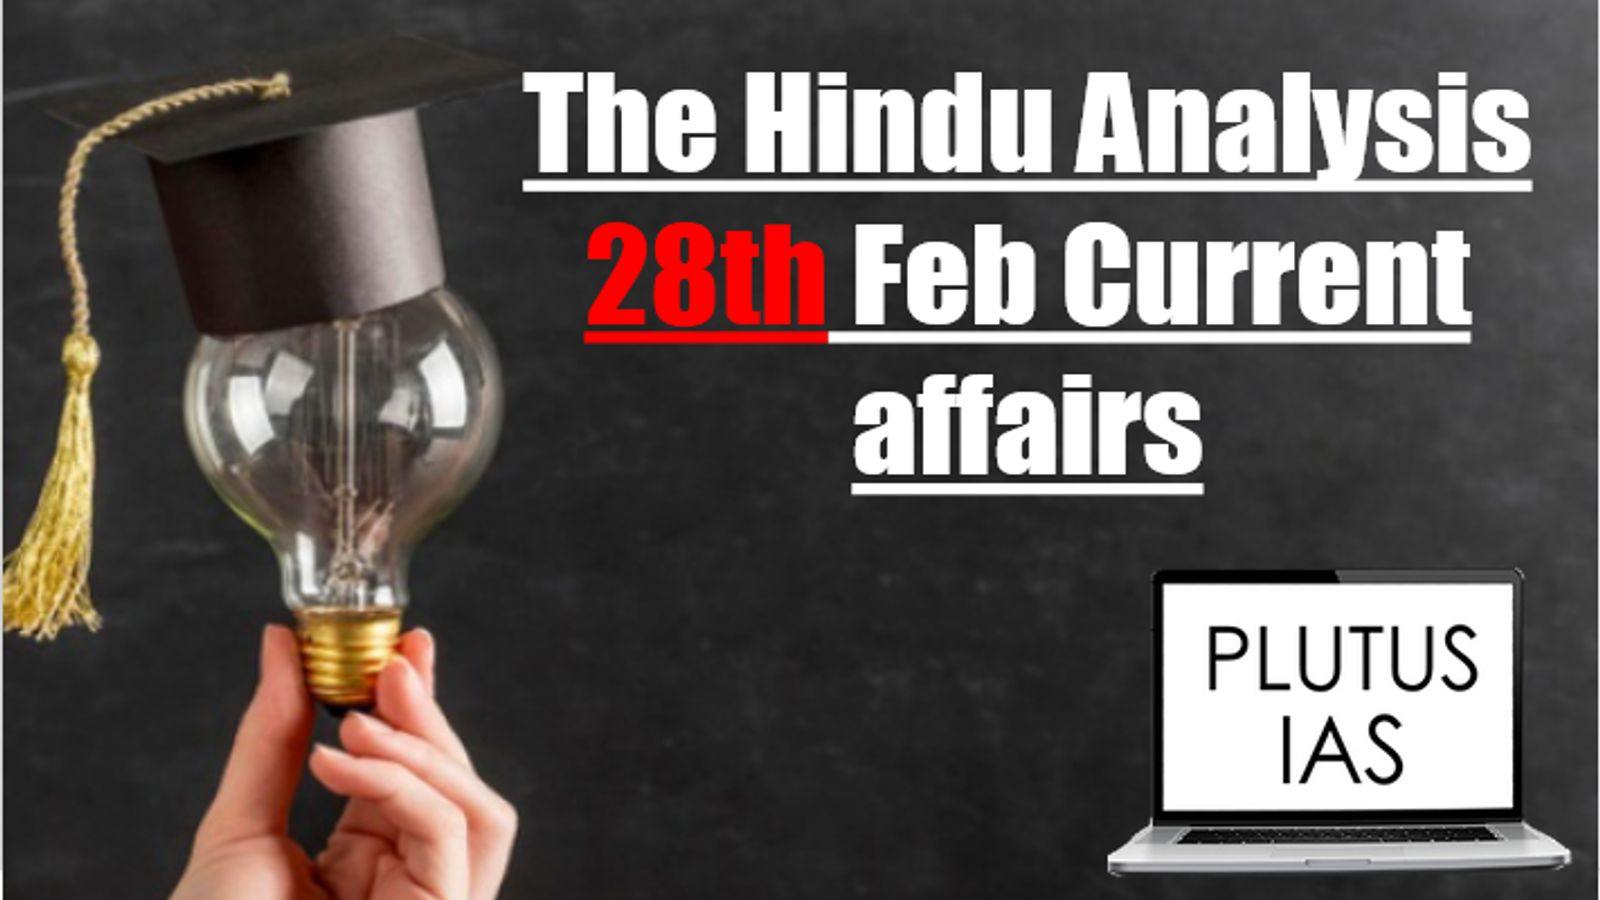 The Hindu Analysis 28th February